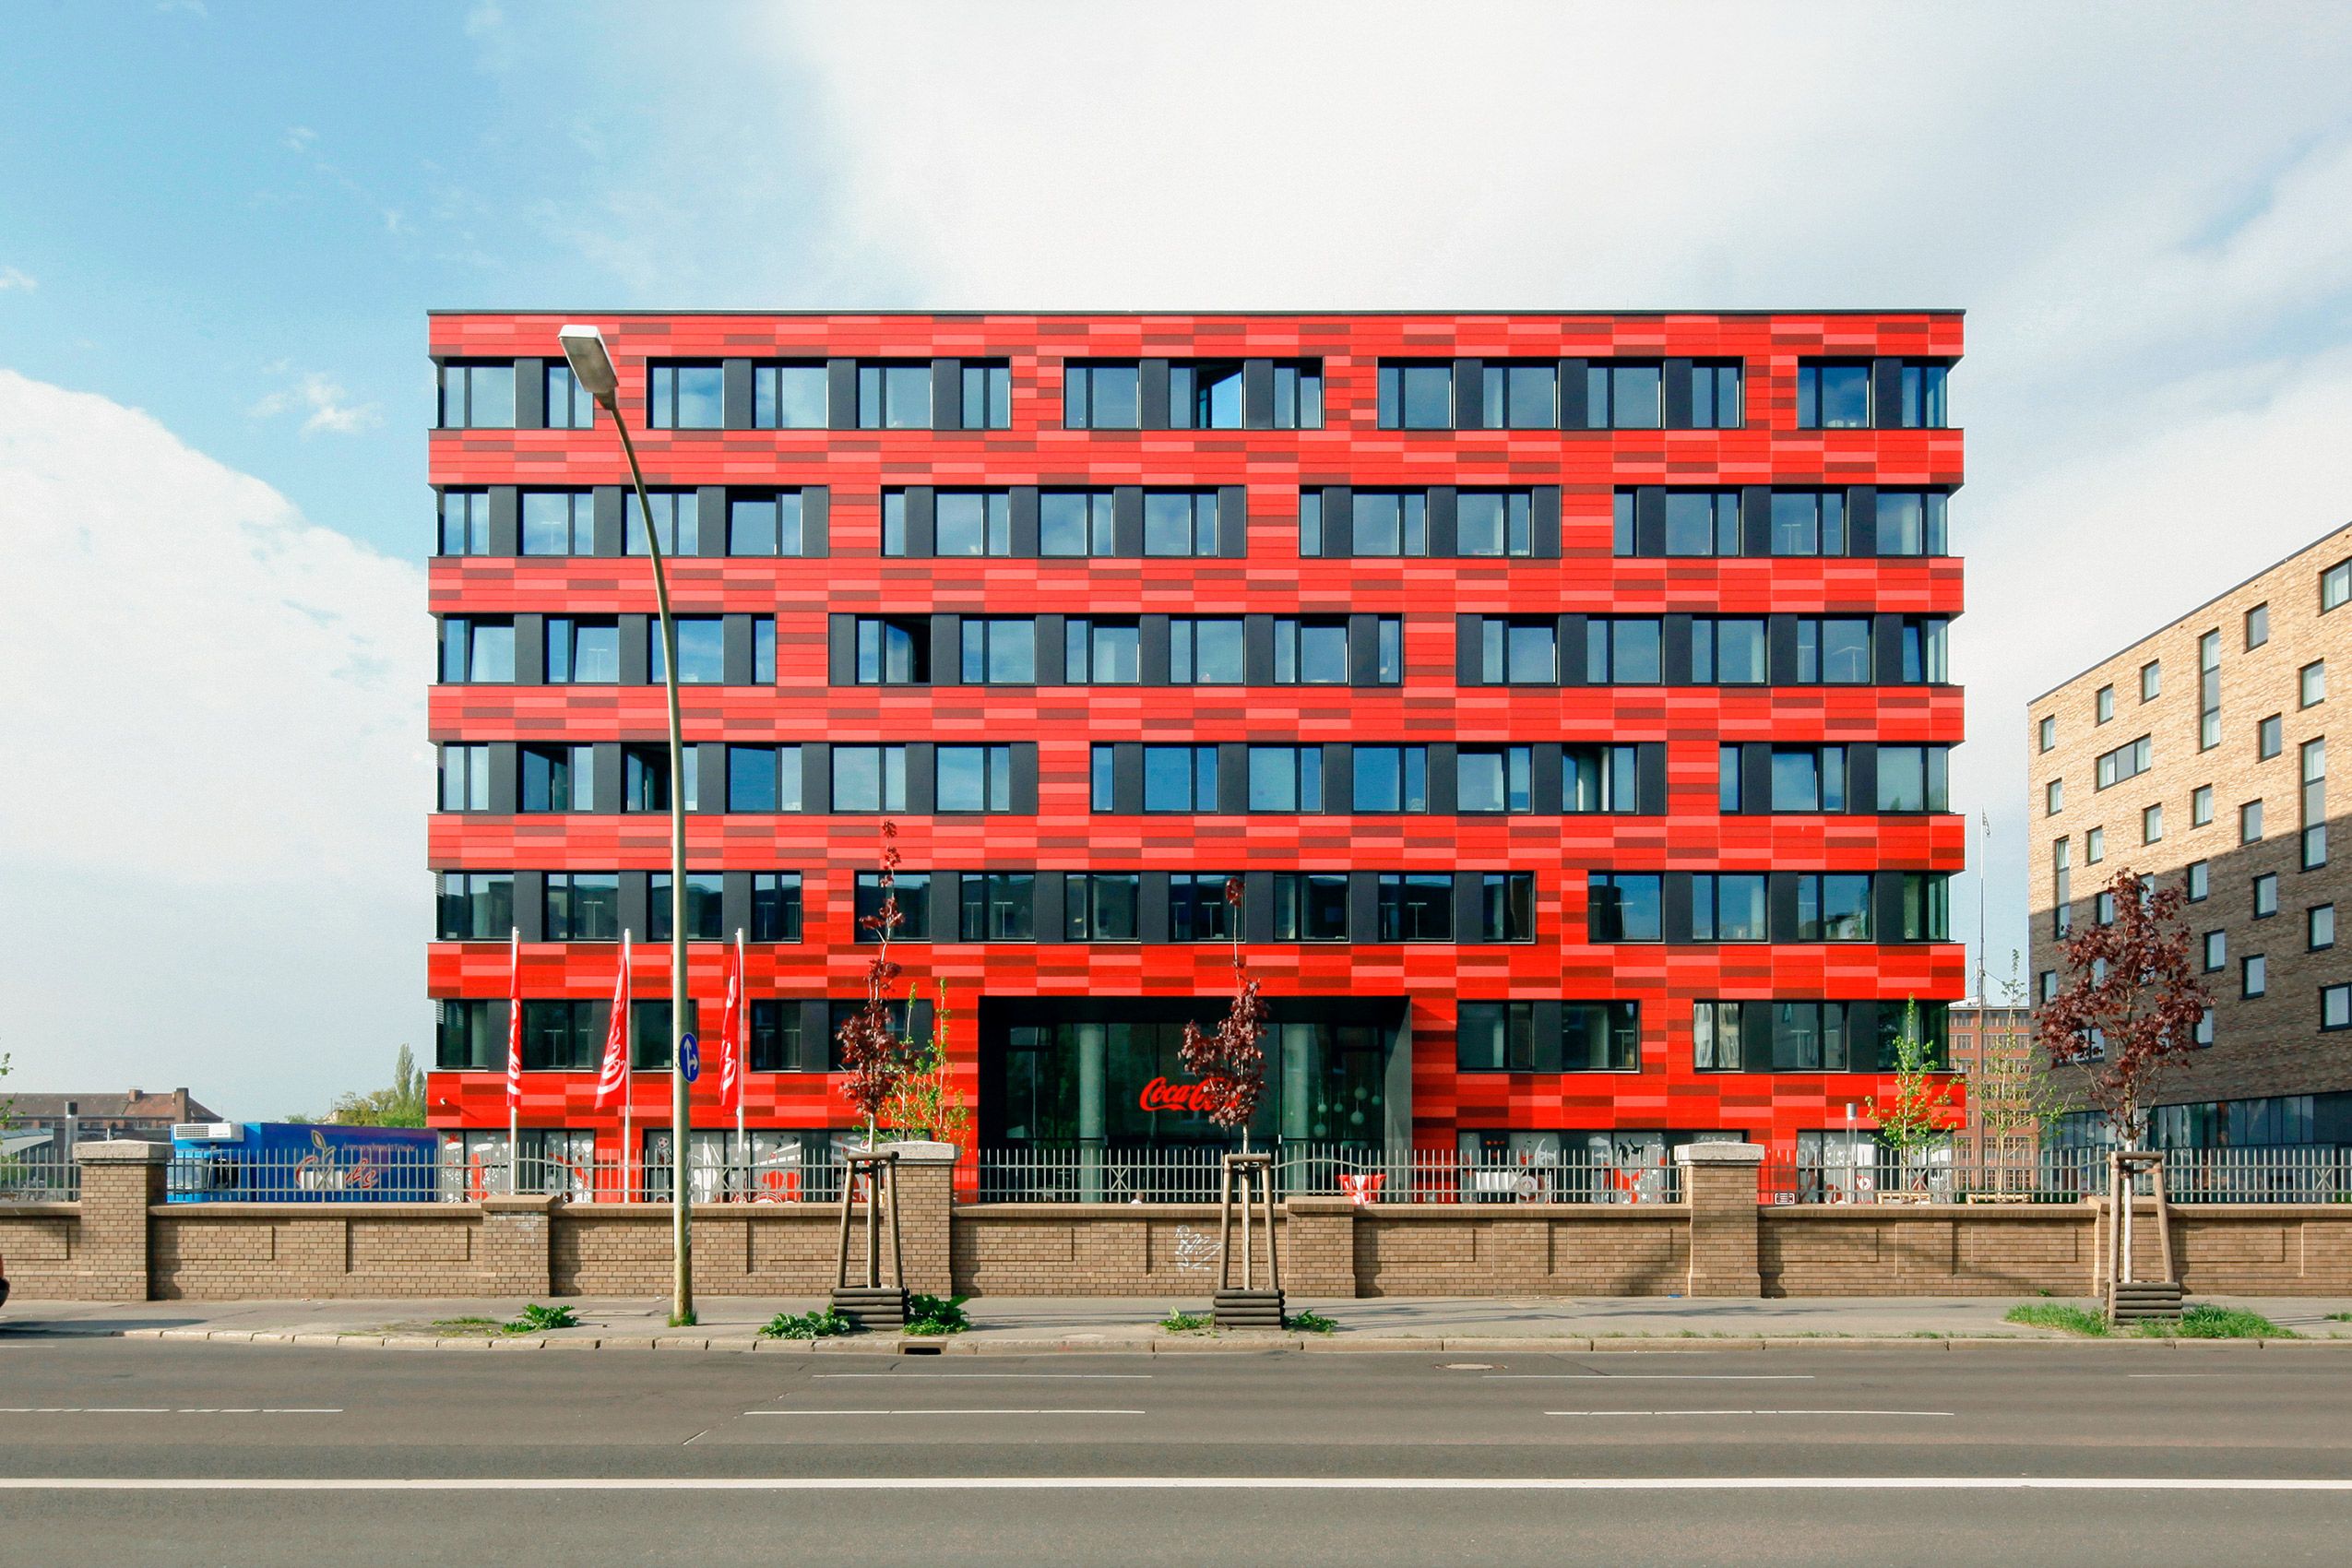 Coca-Cola Headquarter, Berlin 2013